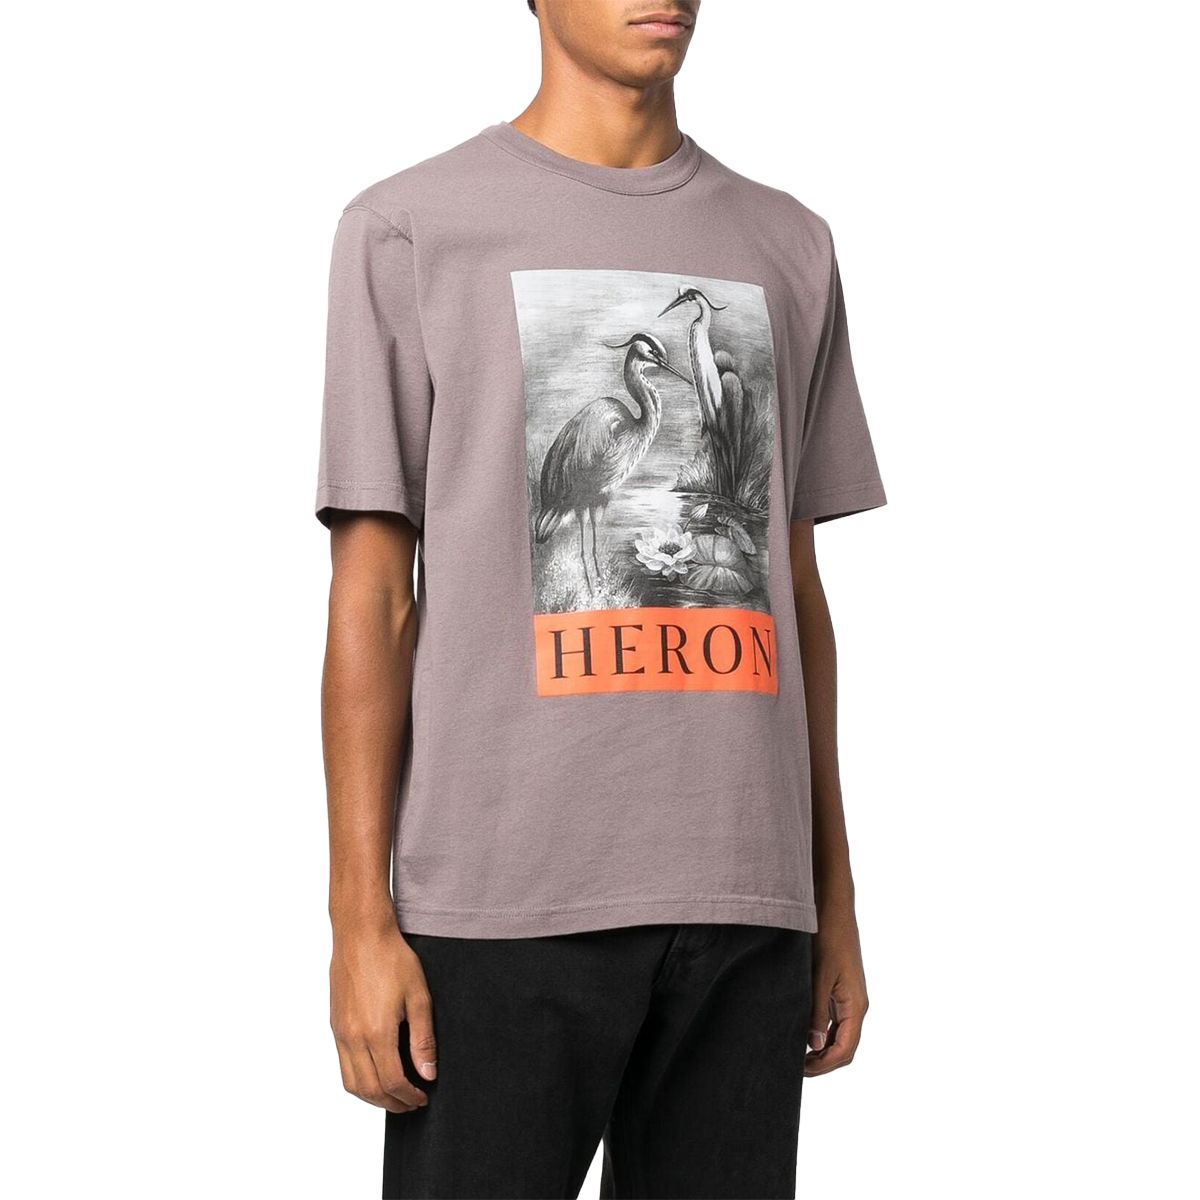 Heron Print Grey T-Shirt